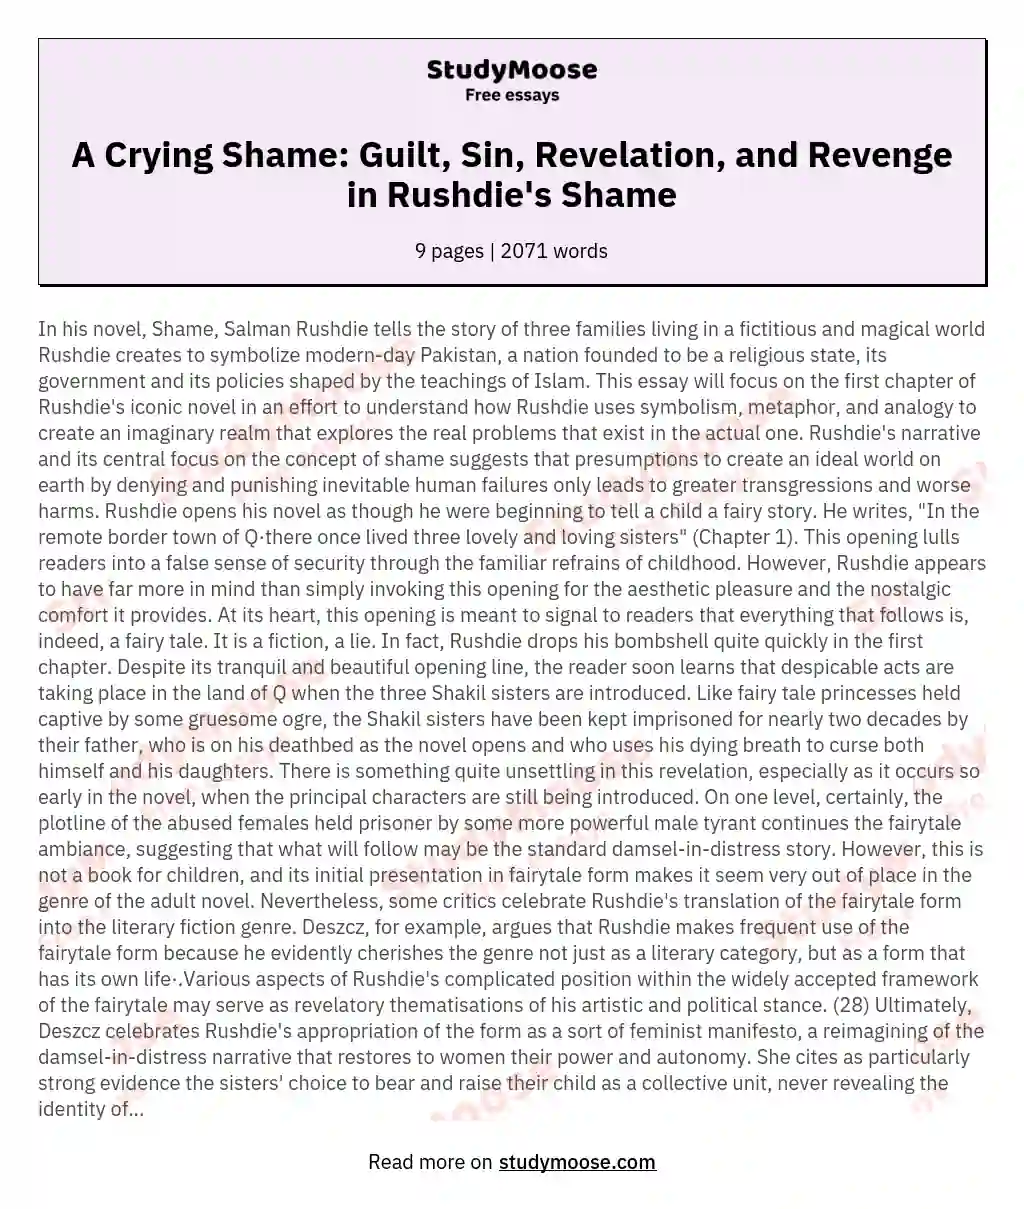 A Crying Shame: Guilt, Sin, Revelation, and Revenge in Rushdie's Shame essay